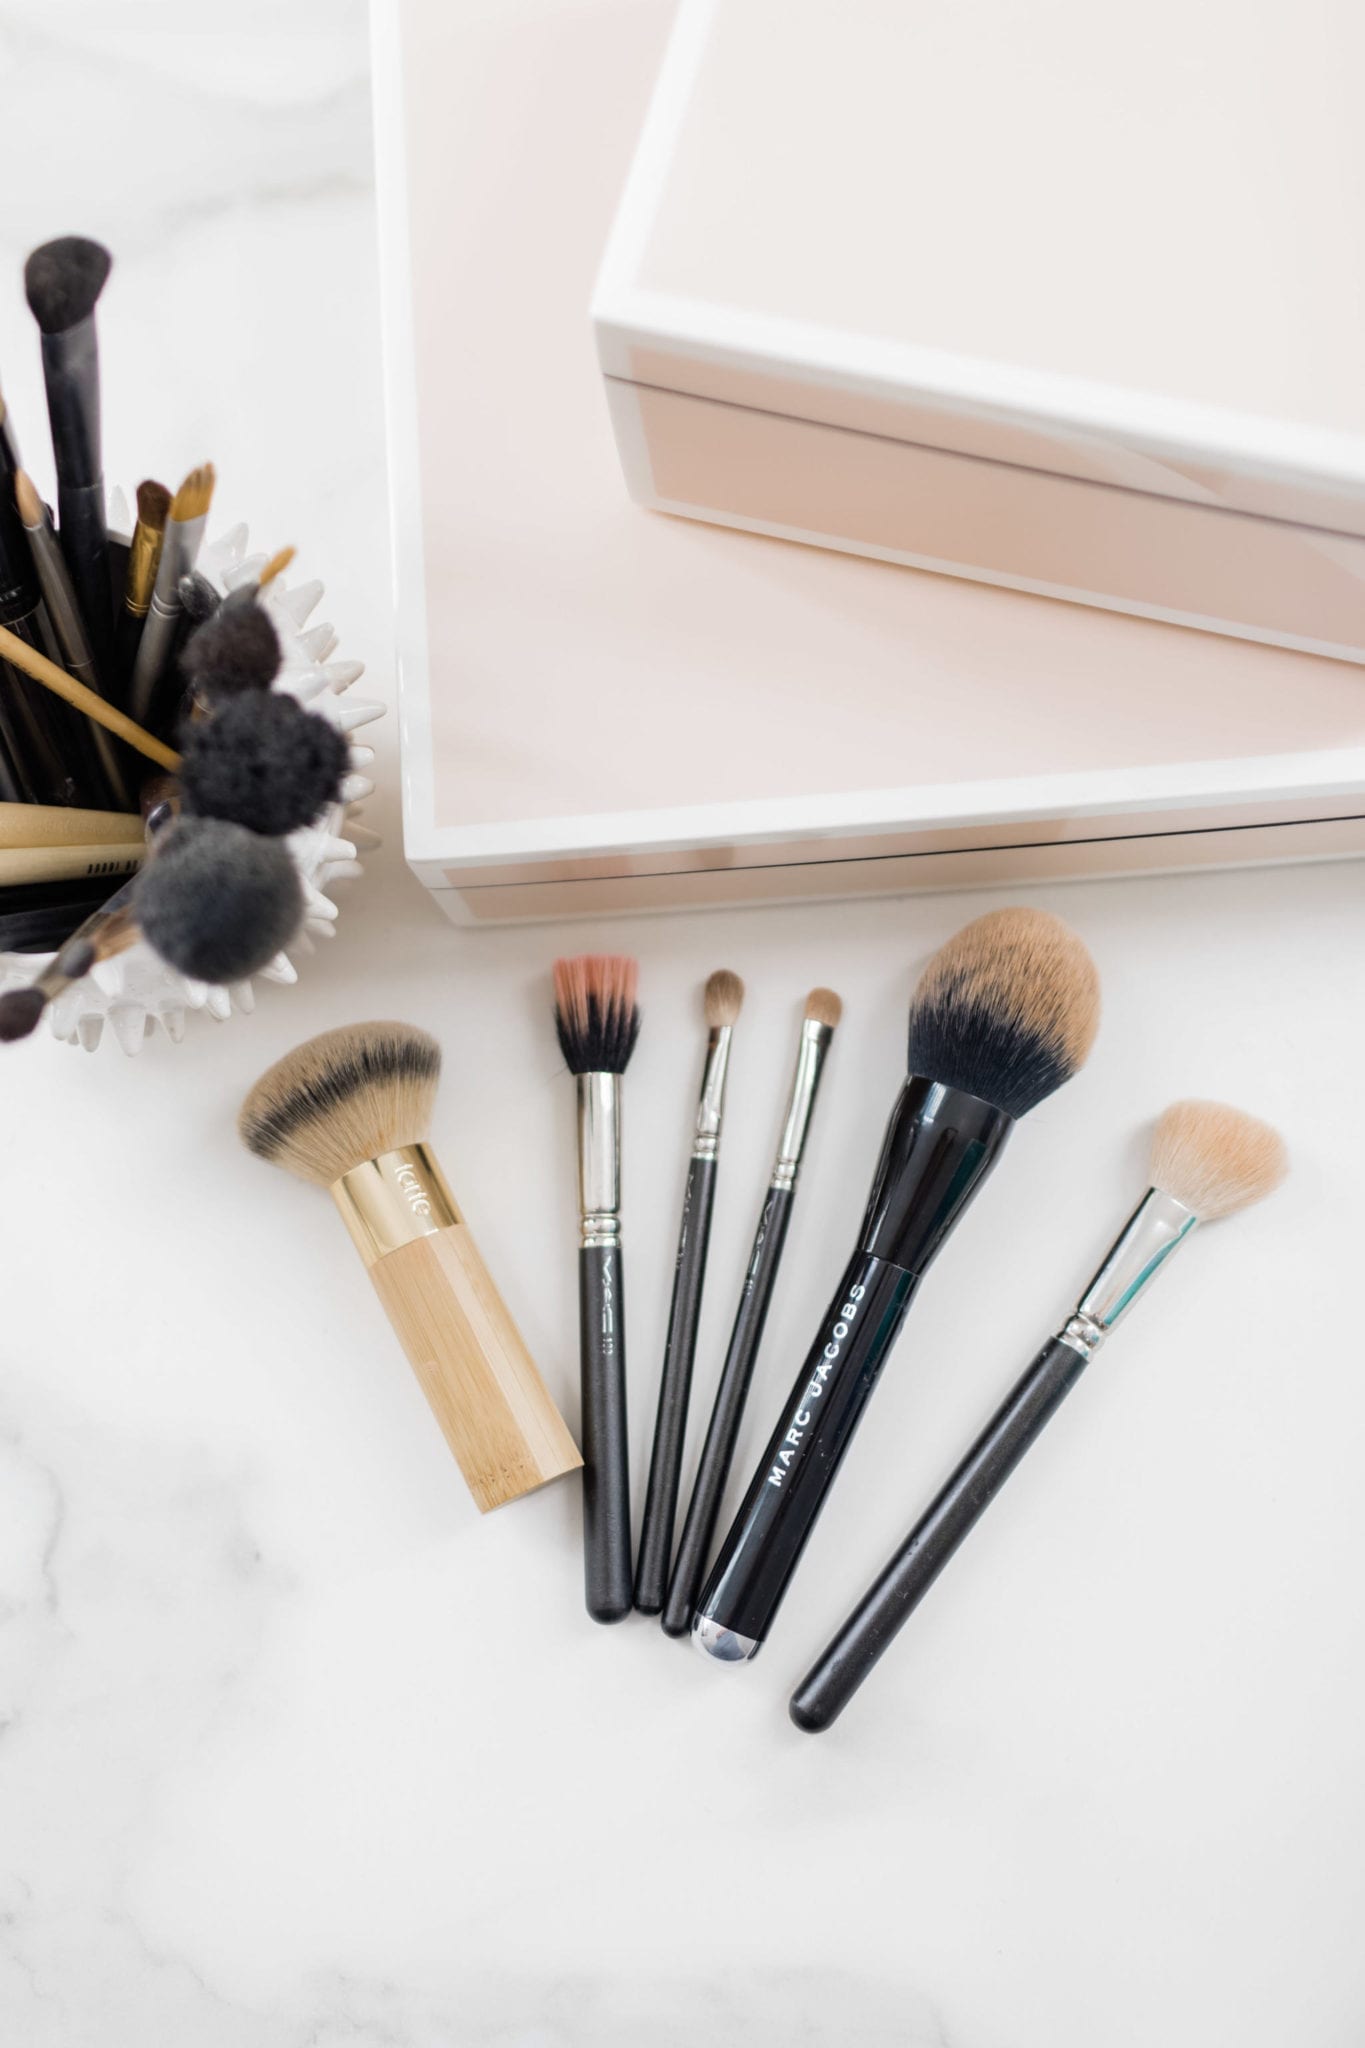 6 Best Makeup Brushes for Everyday - favorite makeup brushes for foundation, bronzer brush, blush brush, eyeshadow brush and highlighter brush!